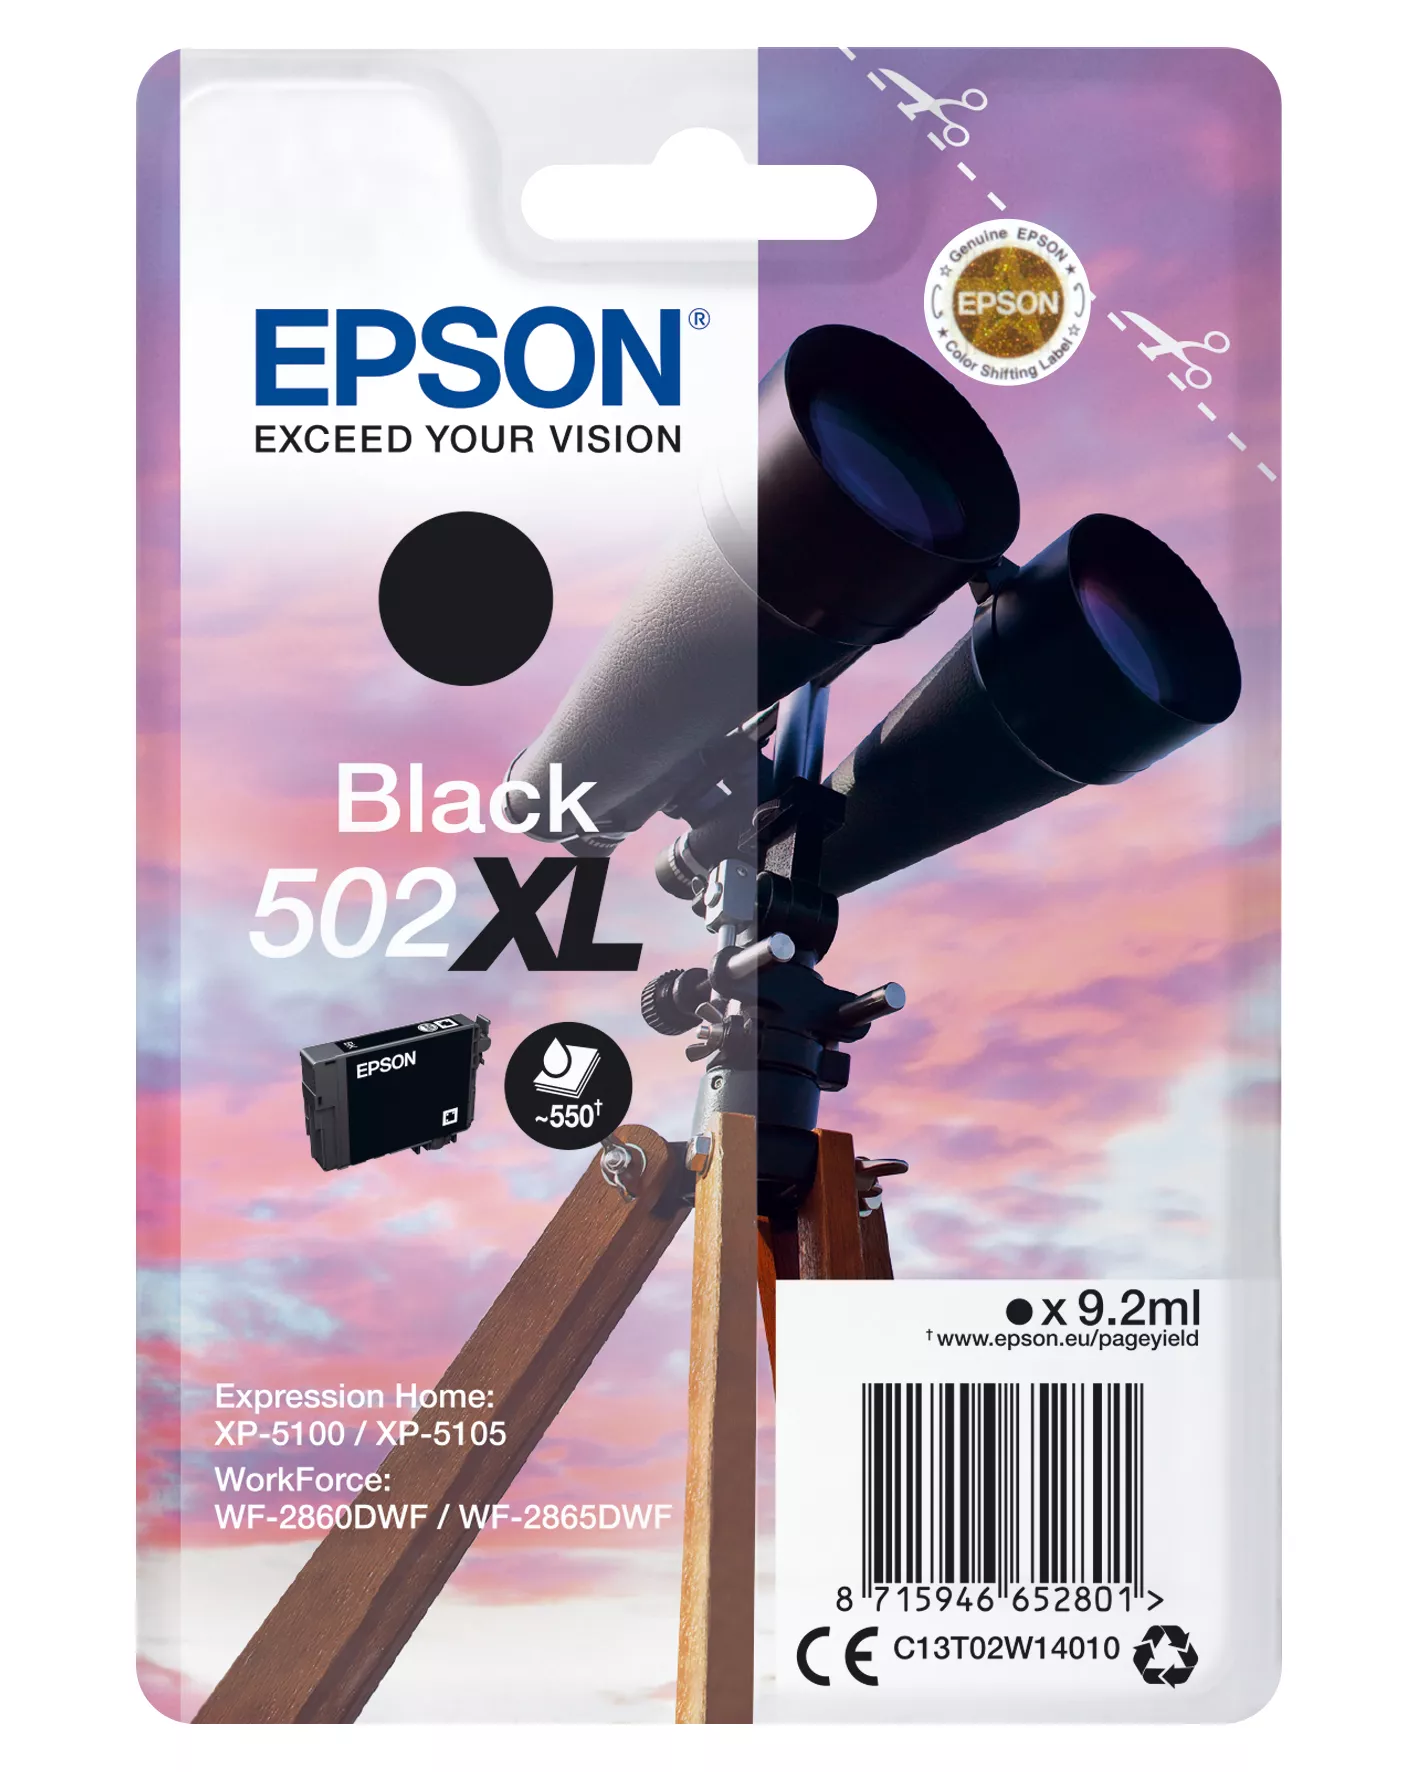 Vente EPSON Singlepack Black 502XL Ink au meilleur prix